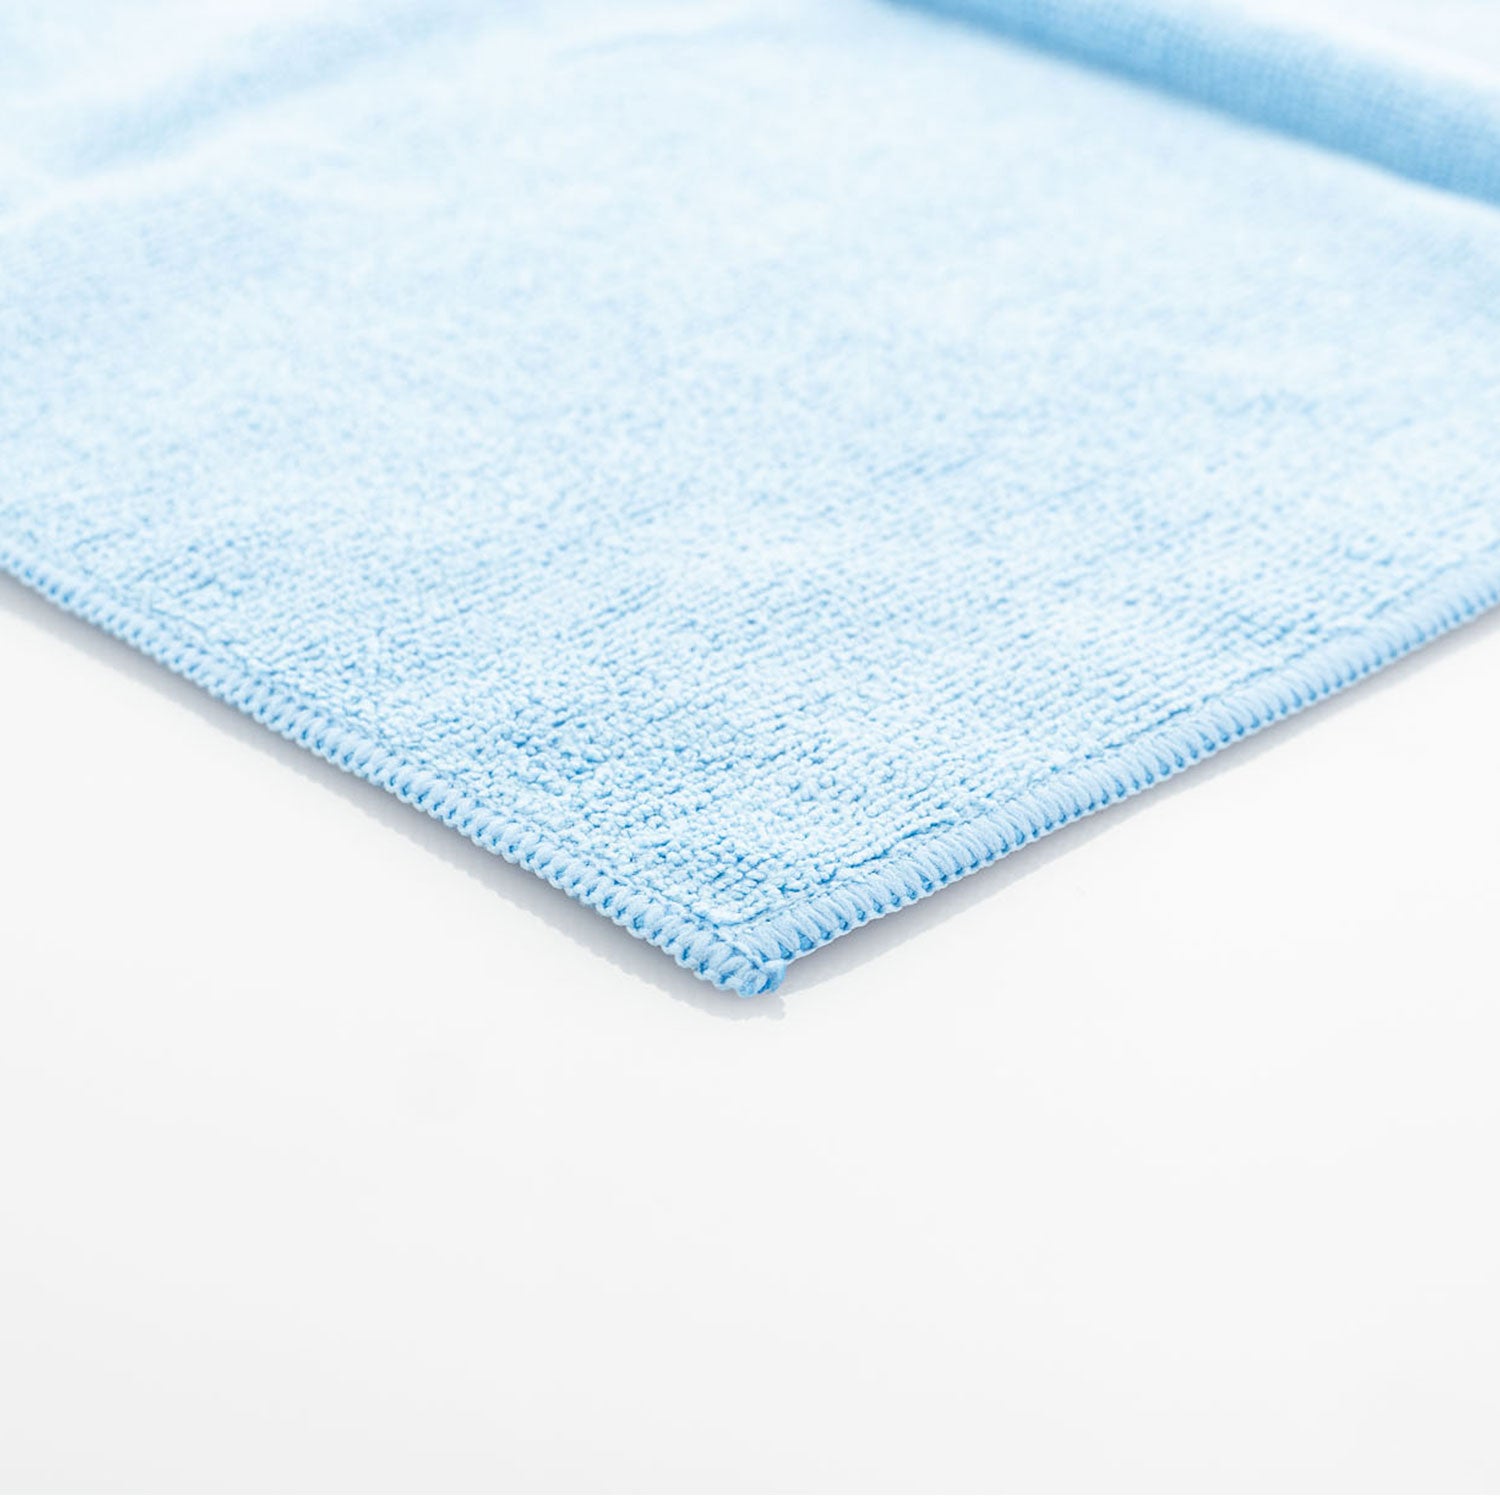 mf1b-blue-microfiber-car-detailing-towel-close-up